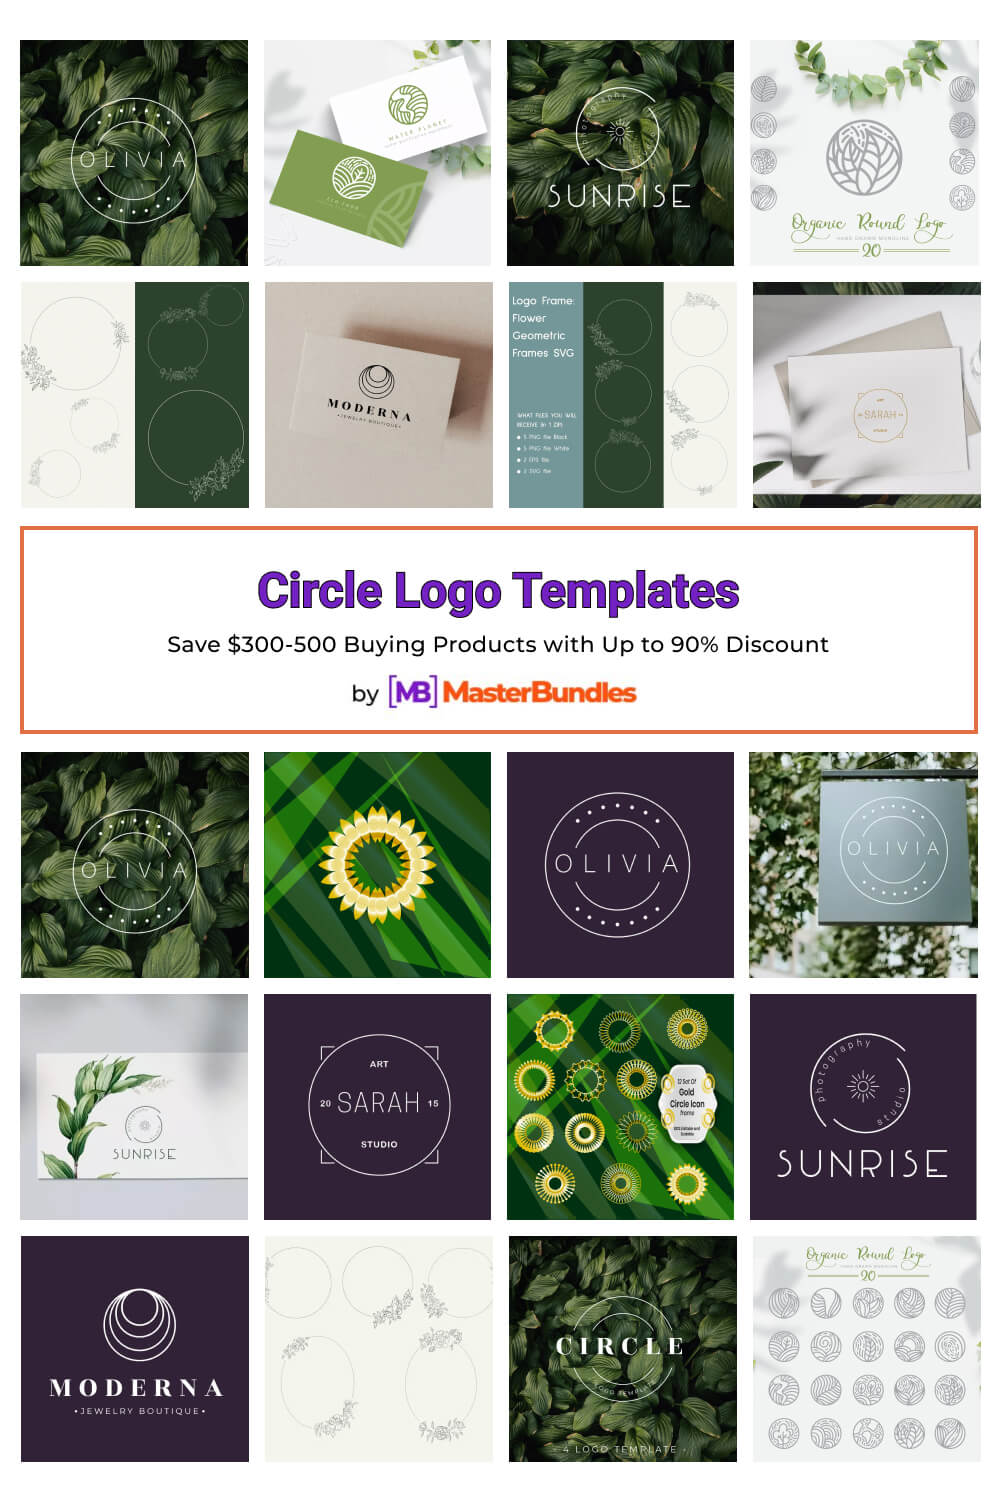 circle logo templates pinterest image.